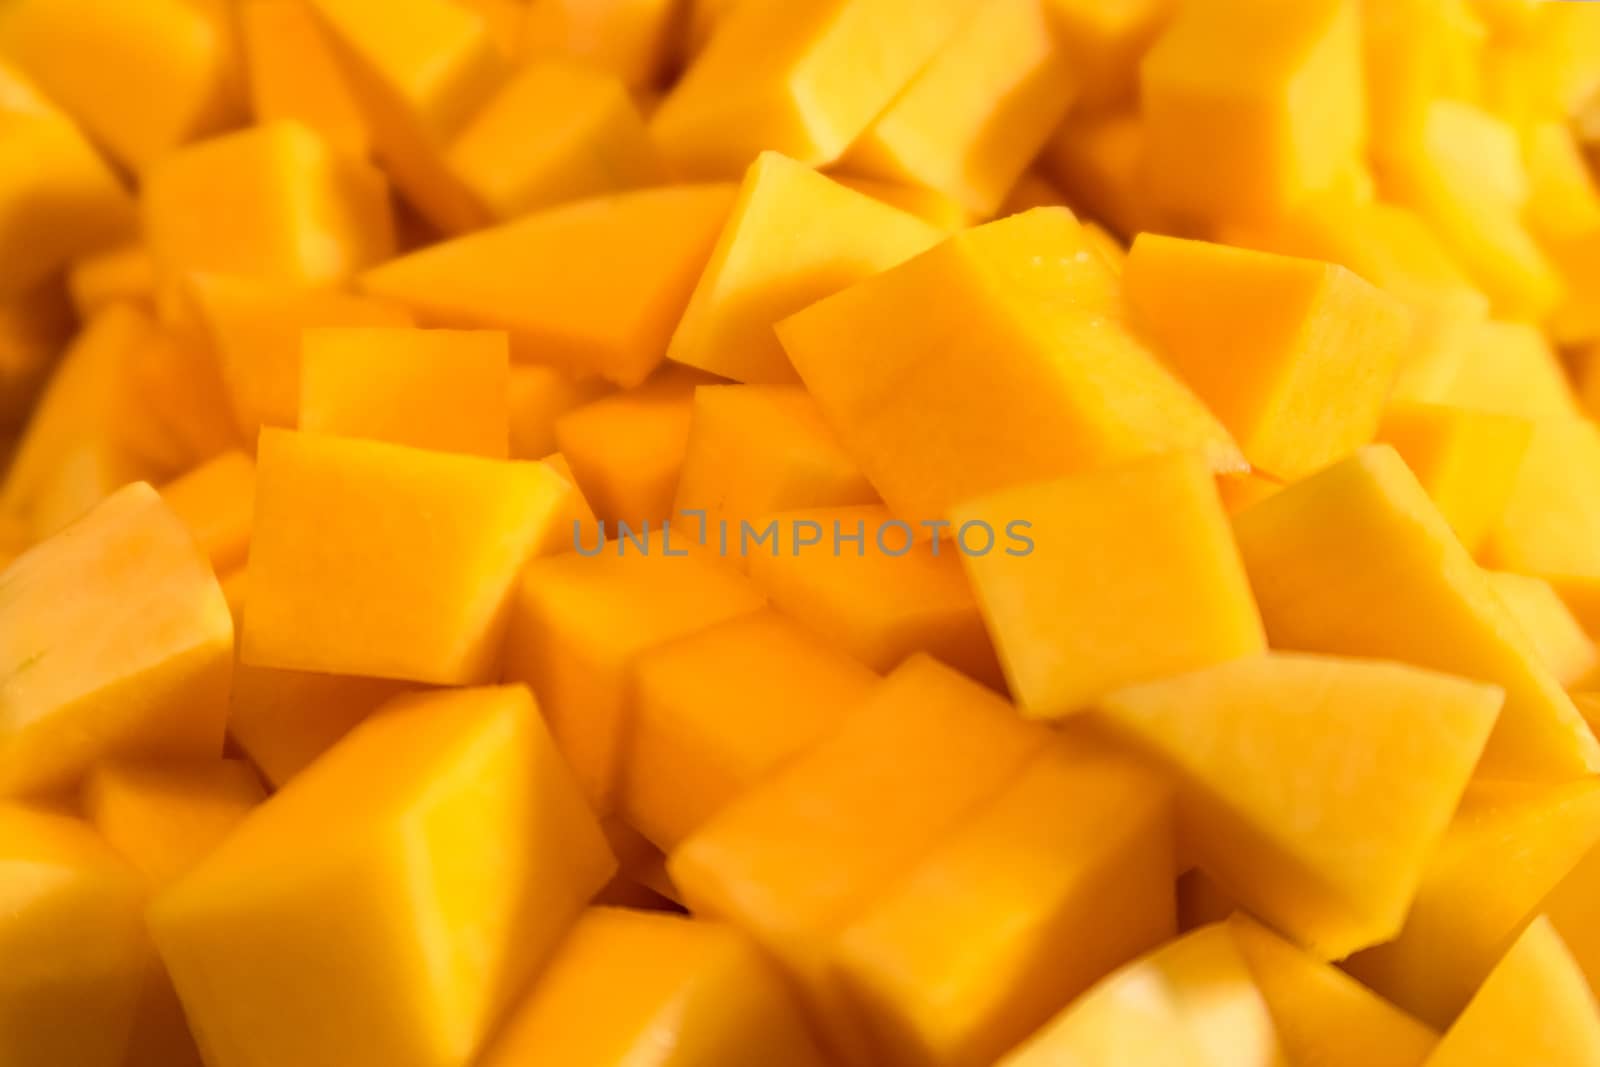 Butternut squash or mango by fpalaticky